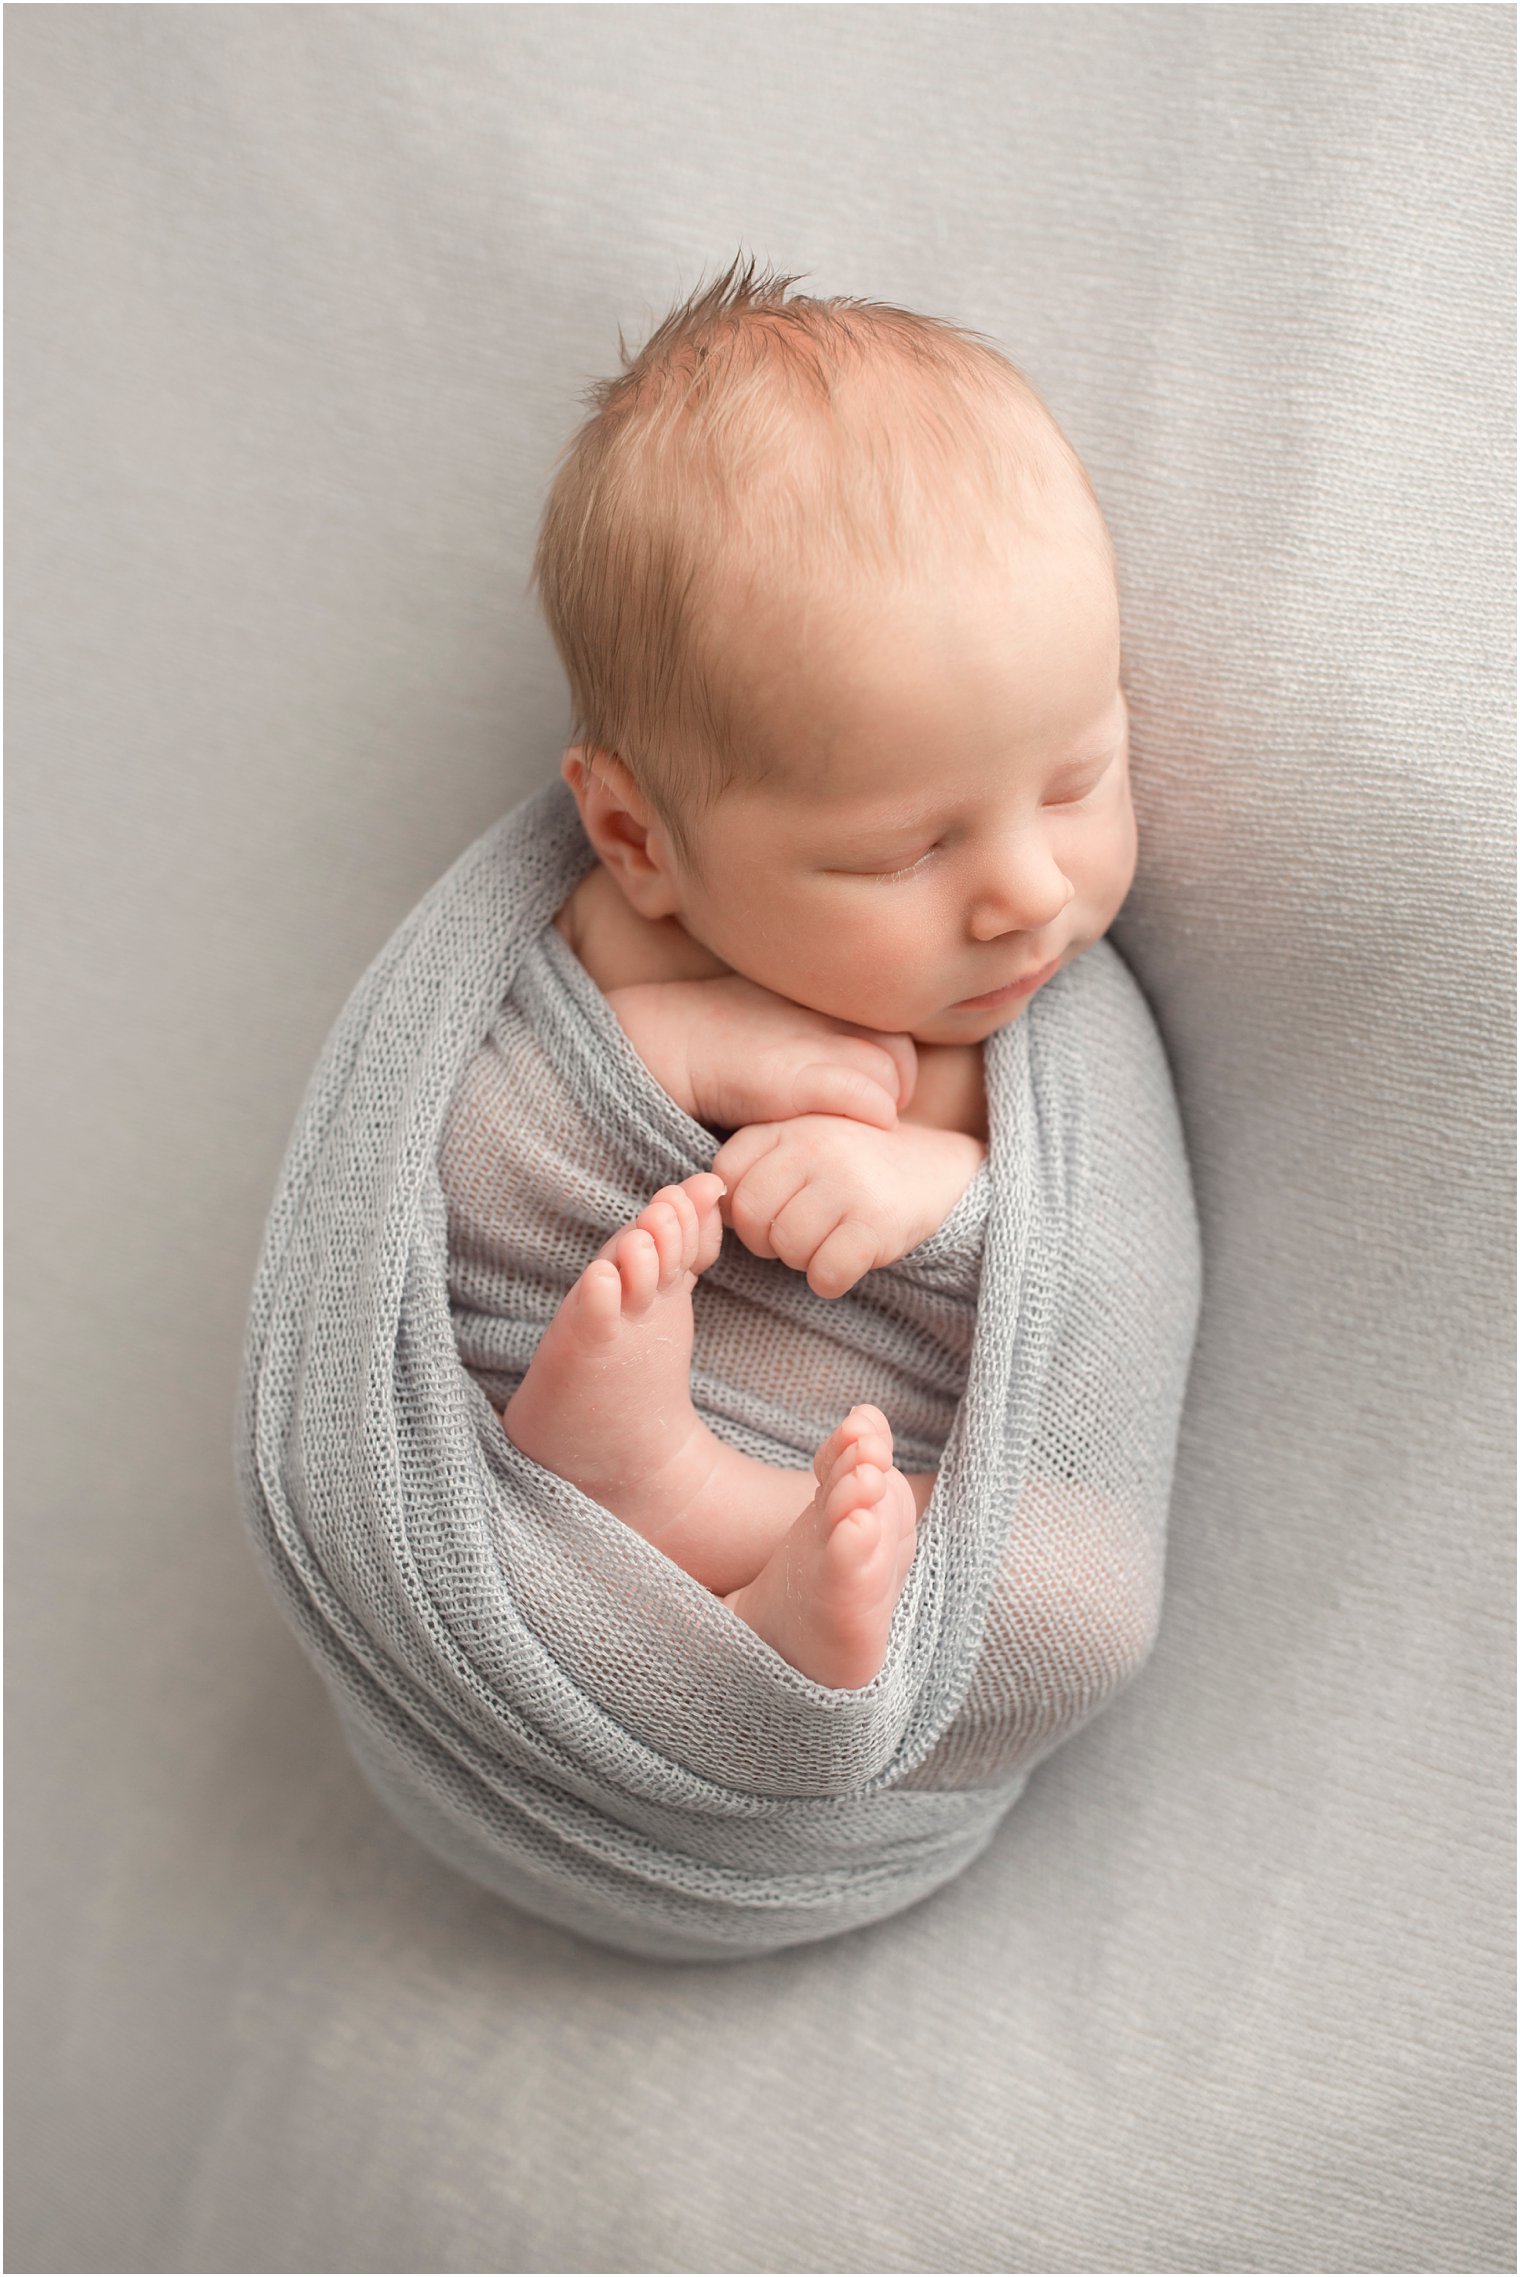 Newborn in blue gray blanket | Red Bank NJ Newborn Photography by Idalia Photography